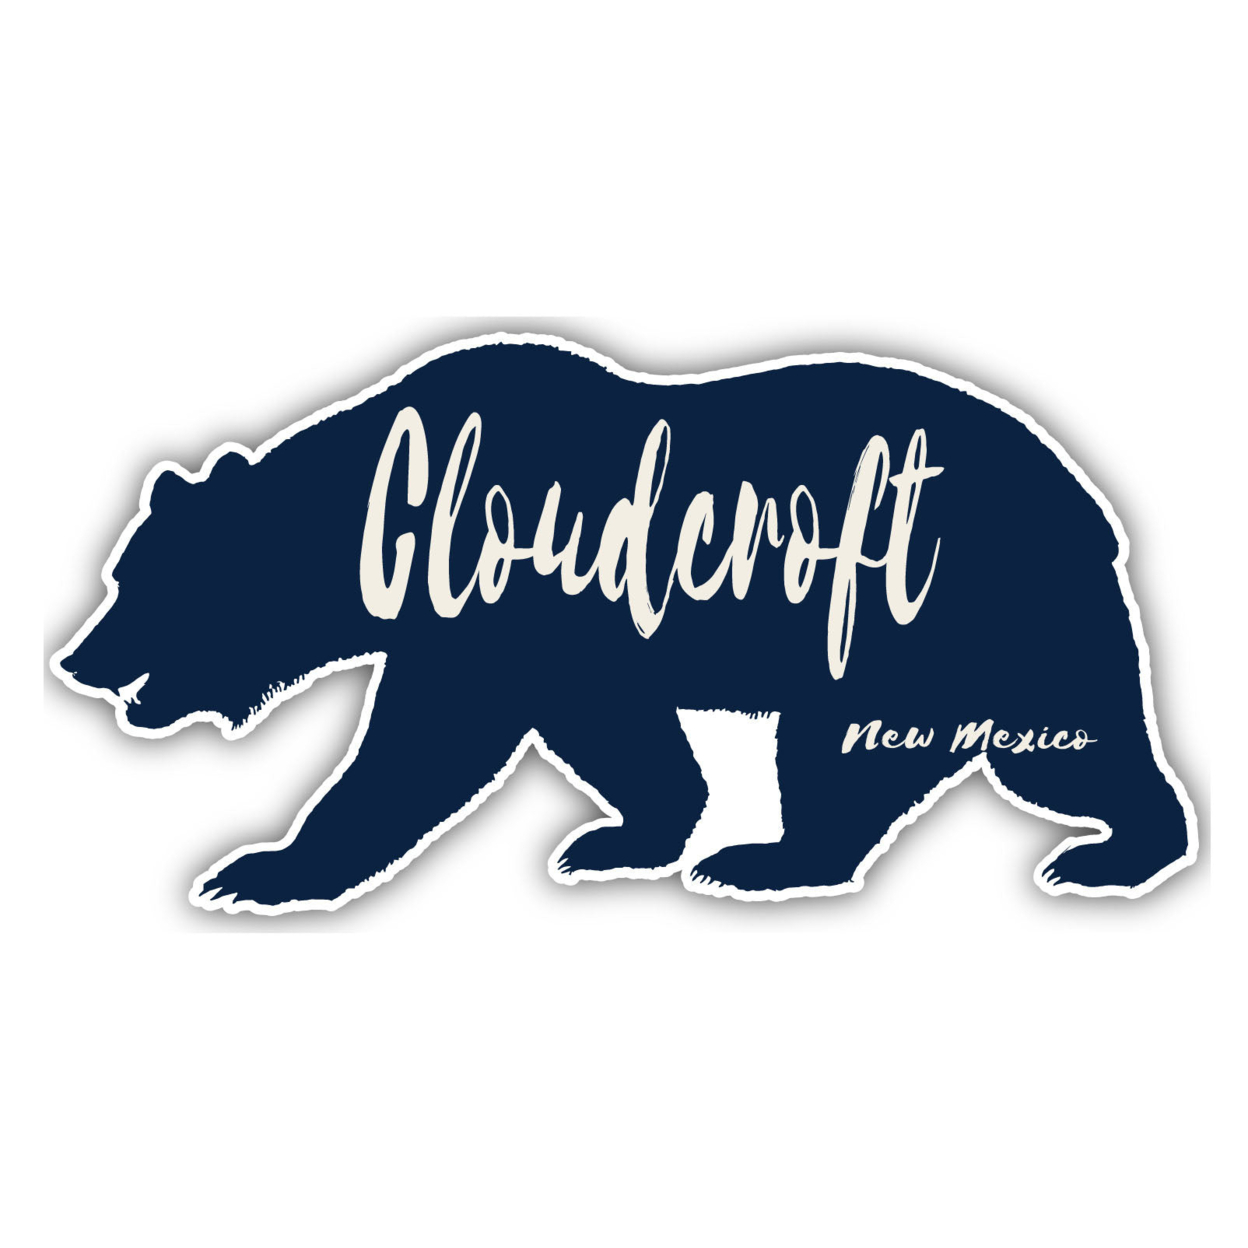 Cloudcroft New Mexico Souvenir Decorative Stickers (Choose Theme And Size) - 4-Pack, 4-Inch, Adventures Awaits